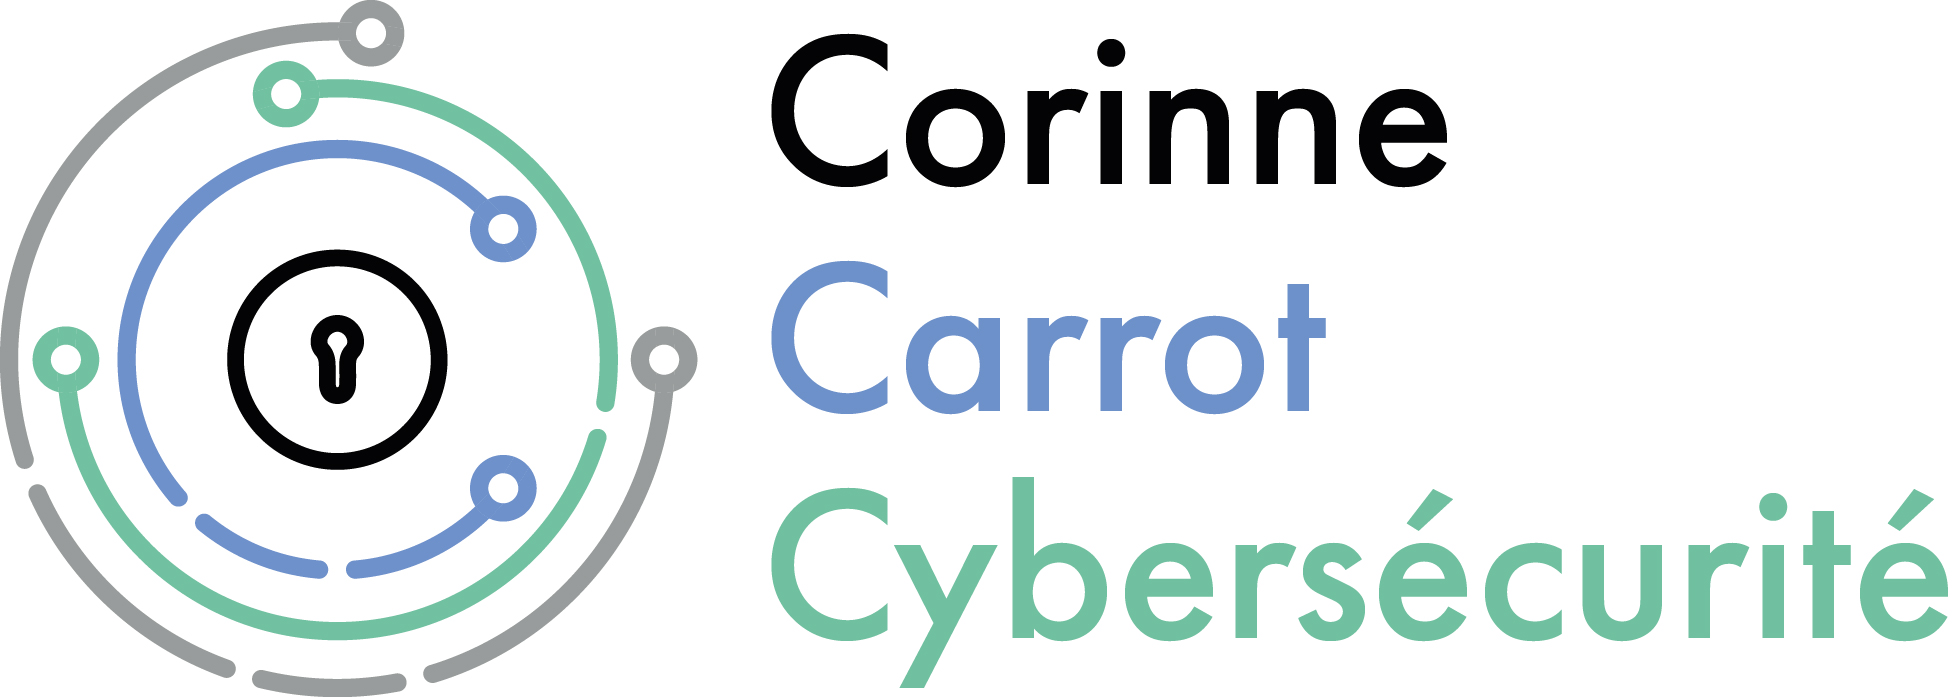 Corinne Carrot Cybersécurité Lille